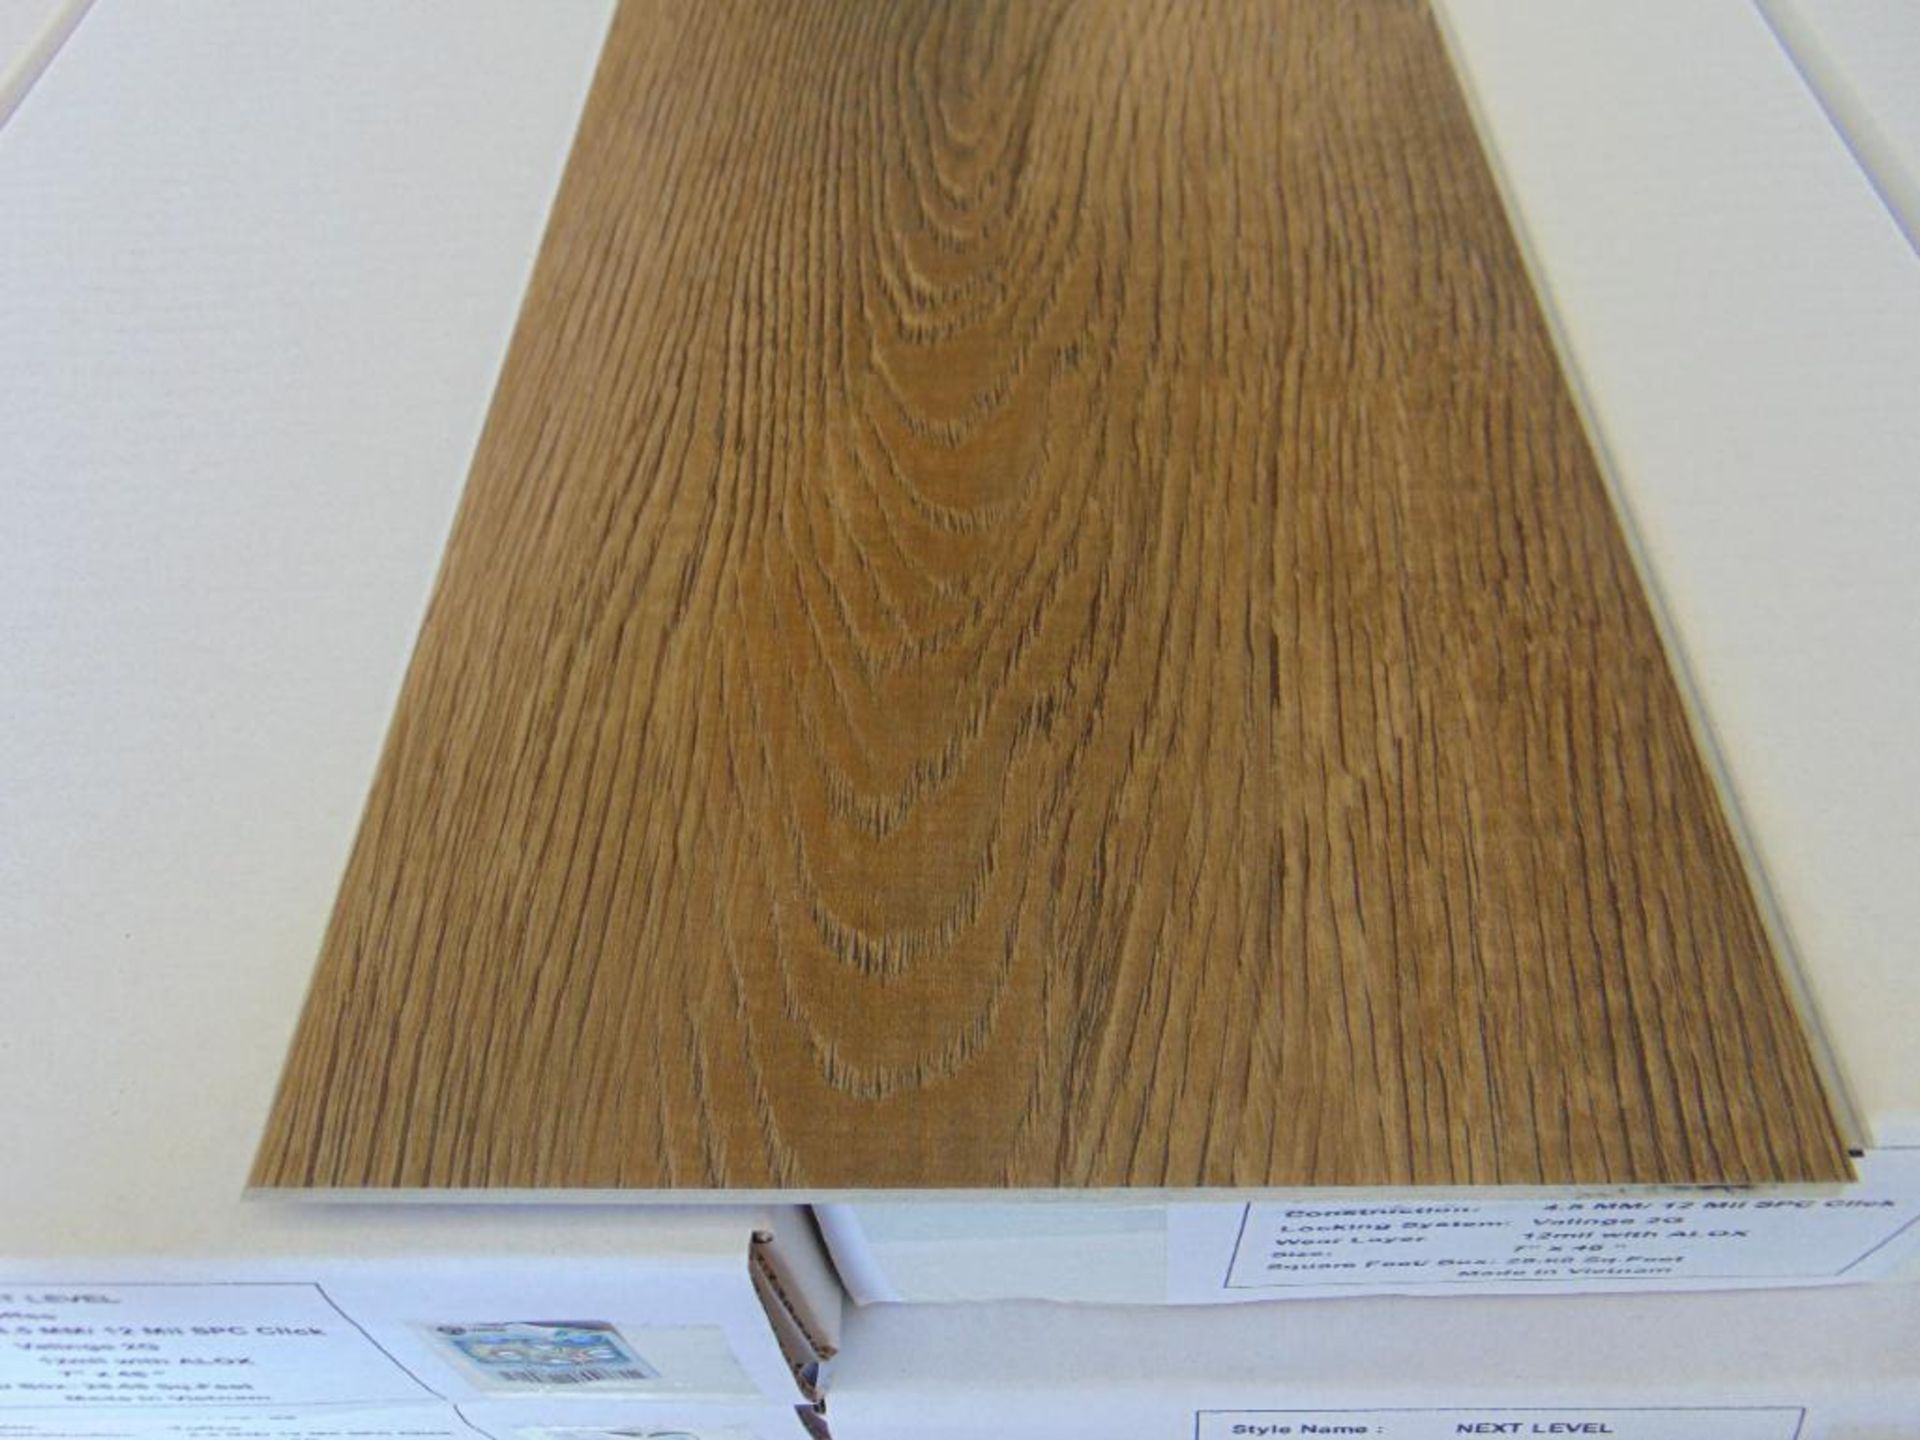 630.96 SF Waterproof Vinyl Plank - Next Level Toffee Snap Together Flooring - Image 4 of 6